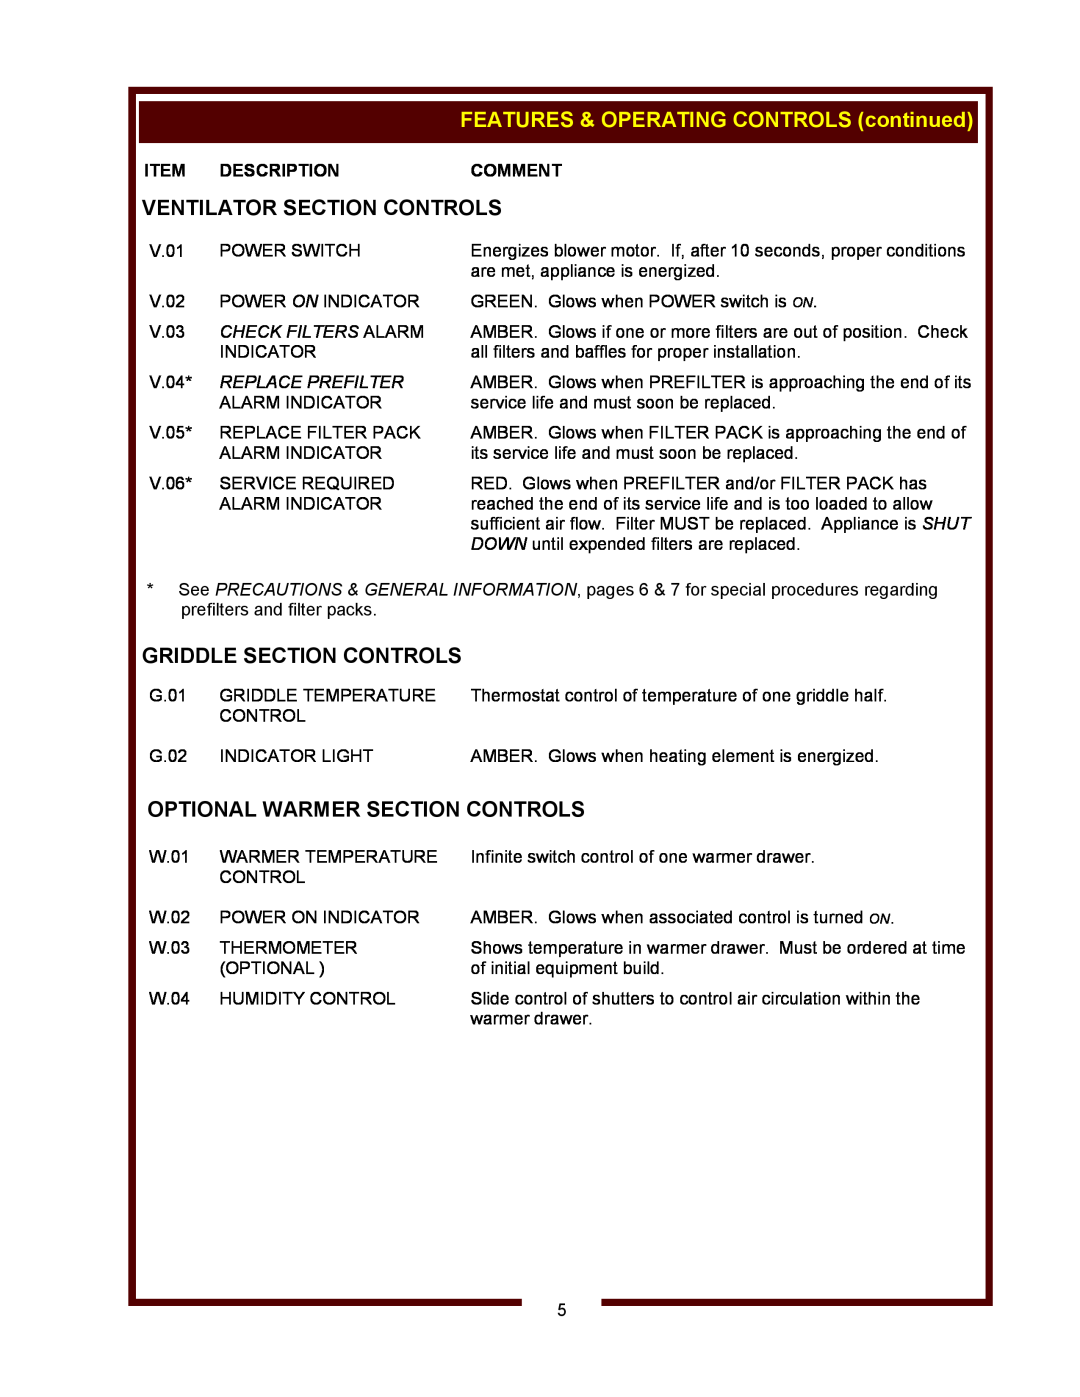 Wells WVG-136RW Ventilator Section Controls, Griddle Section Controls, Optional Warmer Section Controls, Description 